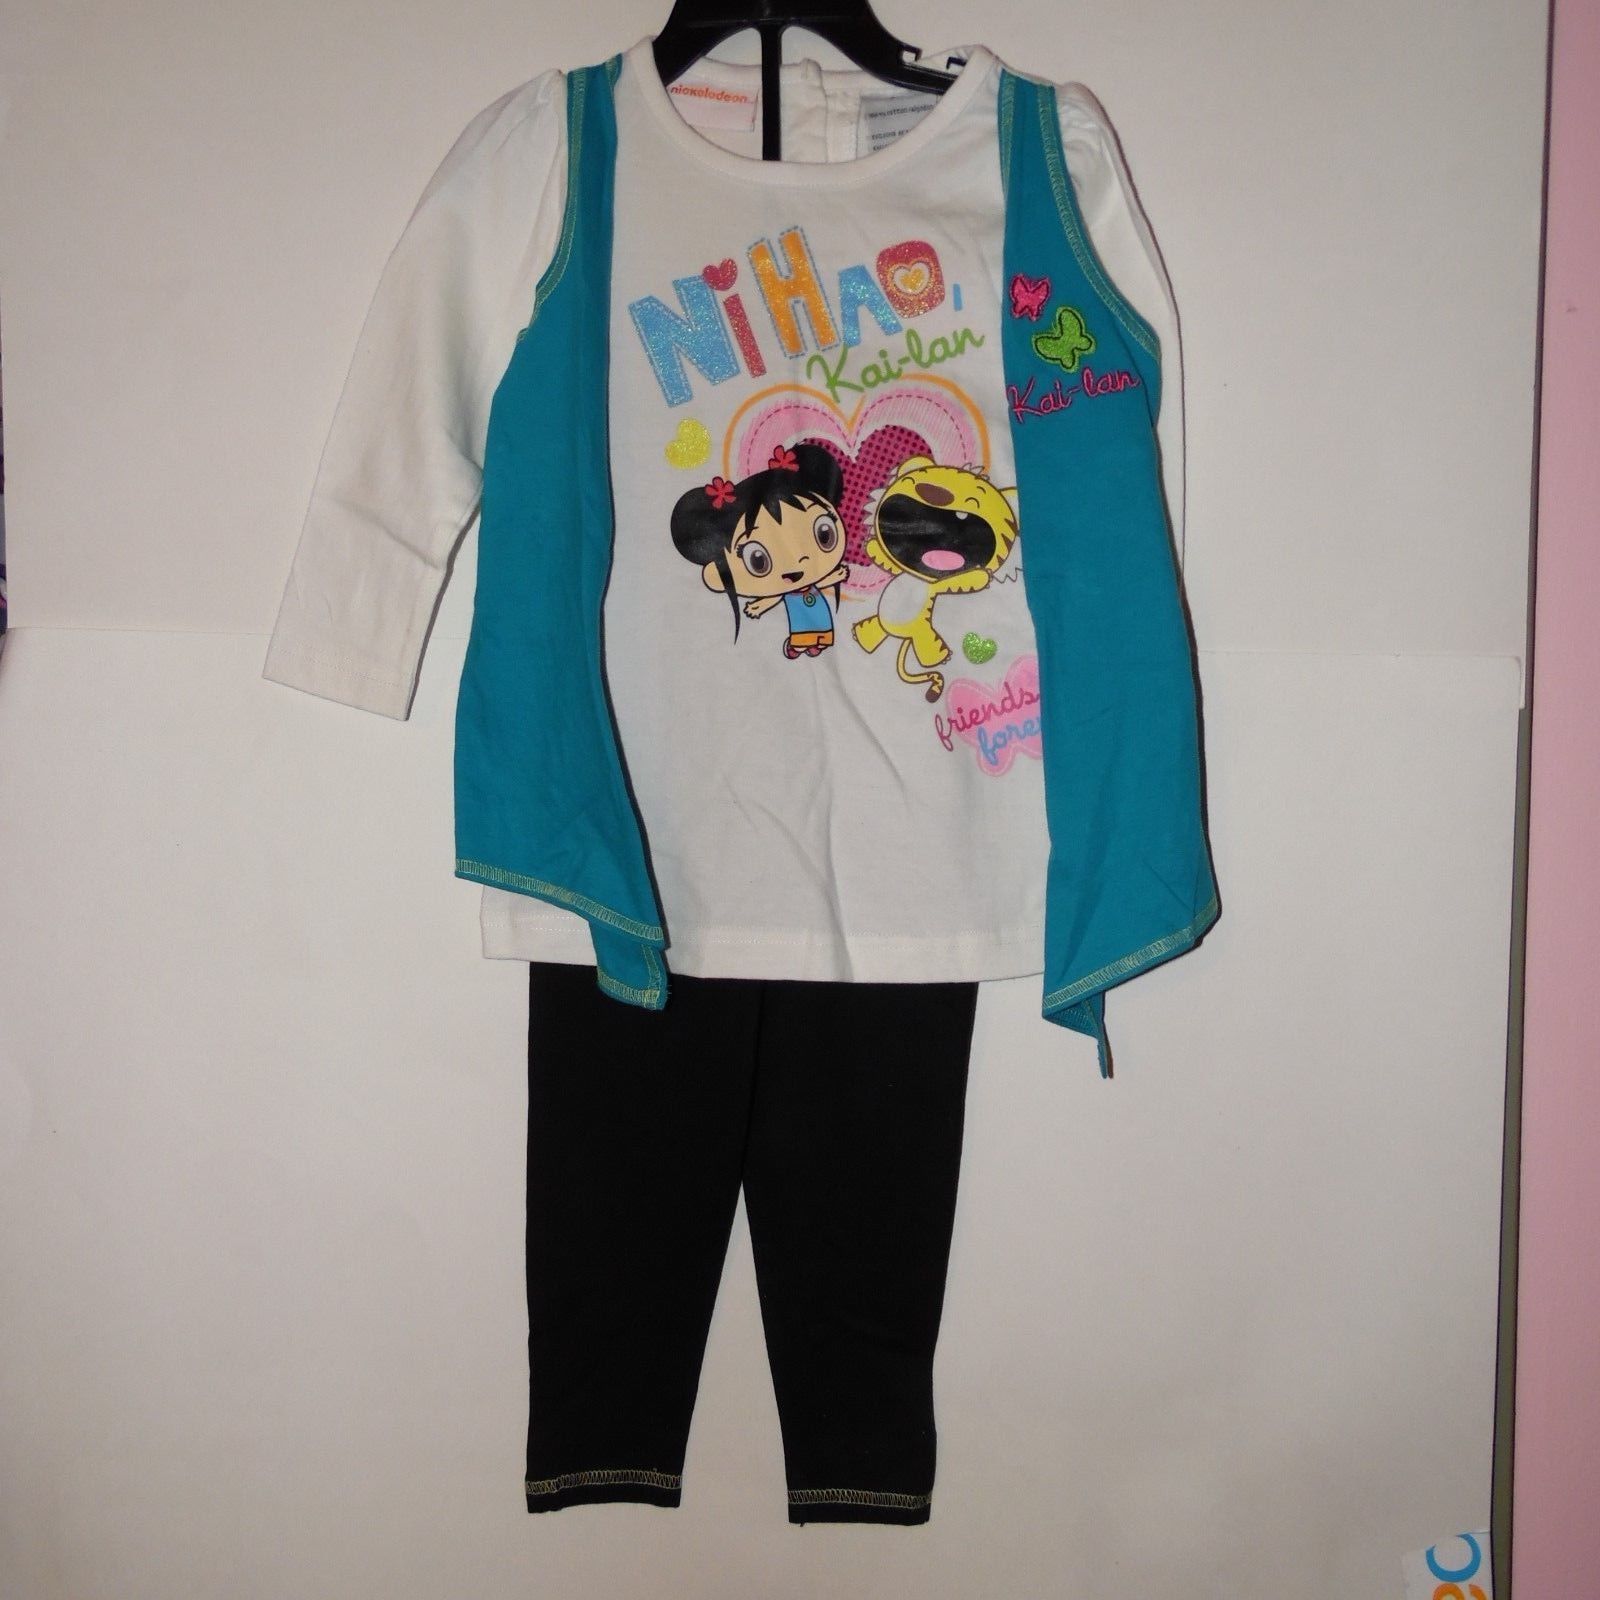 Nihao Kai-lan Toddler Girls 2 piece Pants Outfit Size-24Months NWT - $12.59